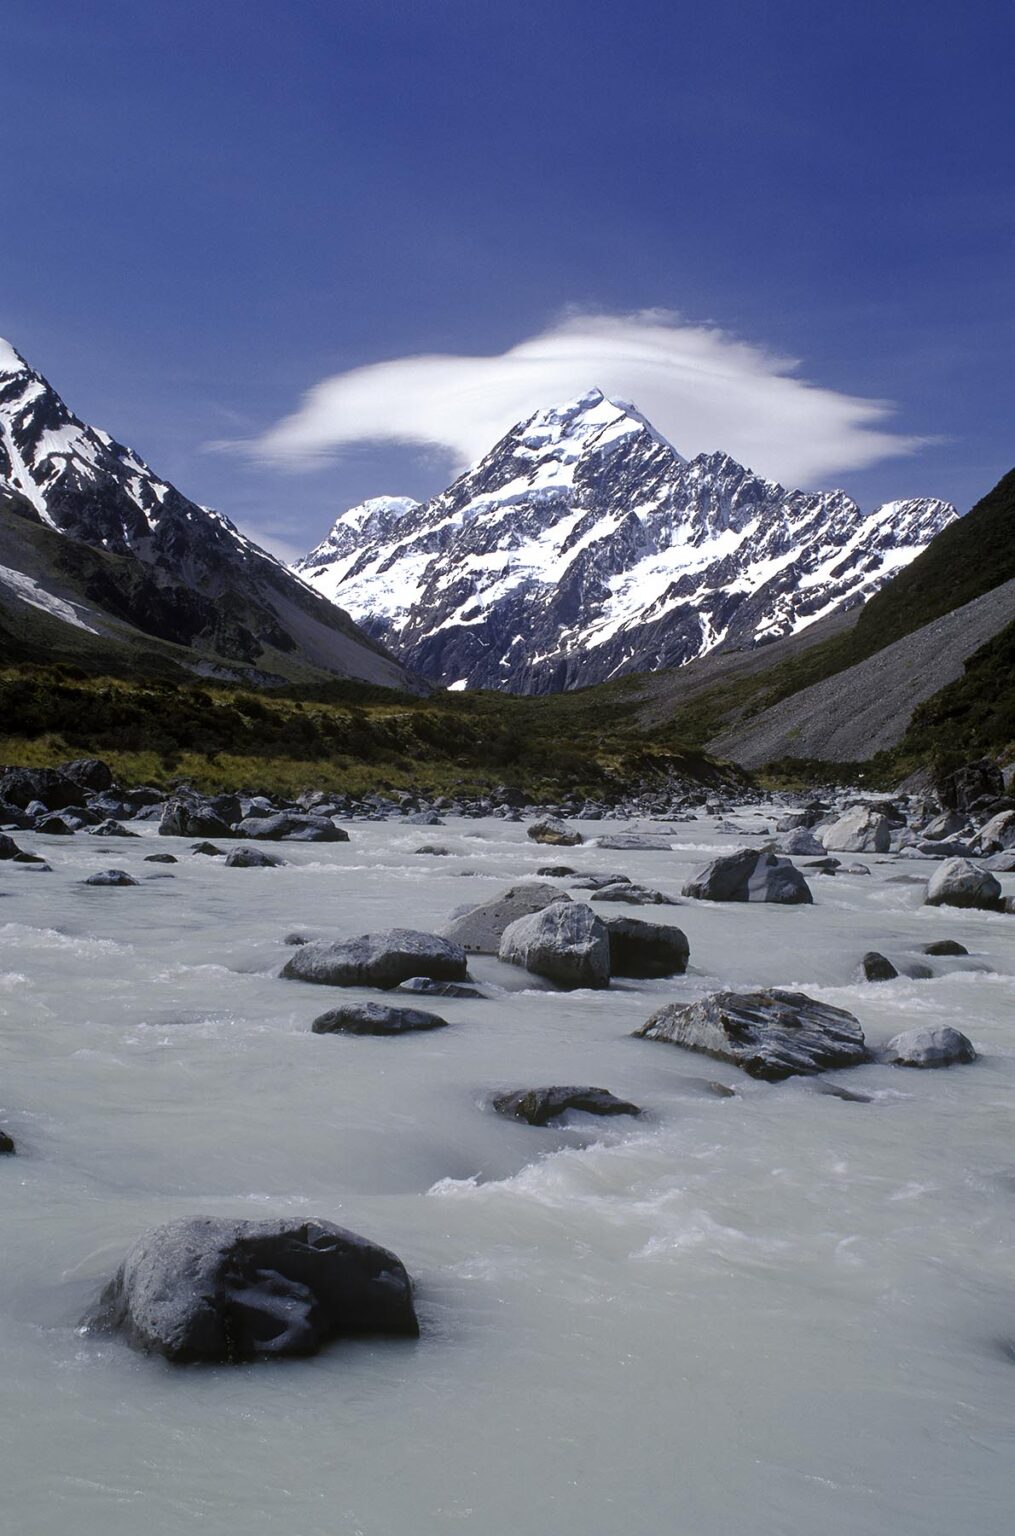 Glacial runoff flows down the HOOKER VALLEY below MT COOK, New Zealand's highest peak at 12,246 feet - MT COOK NP